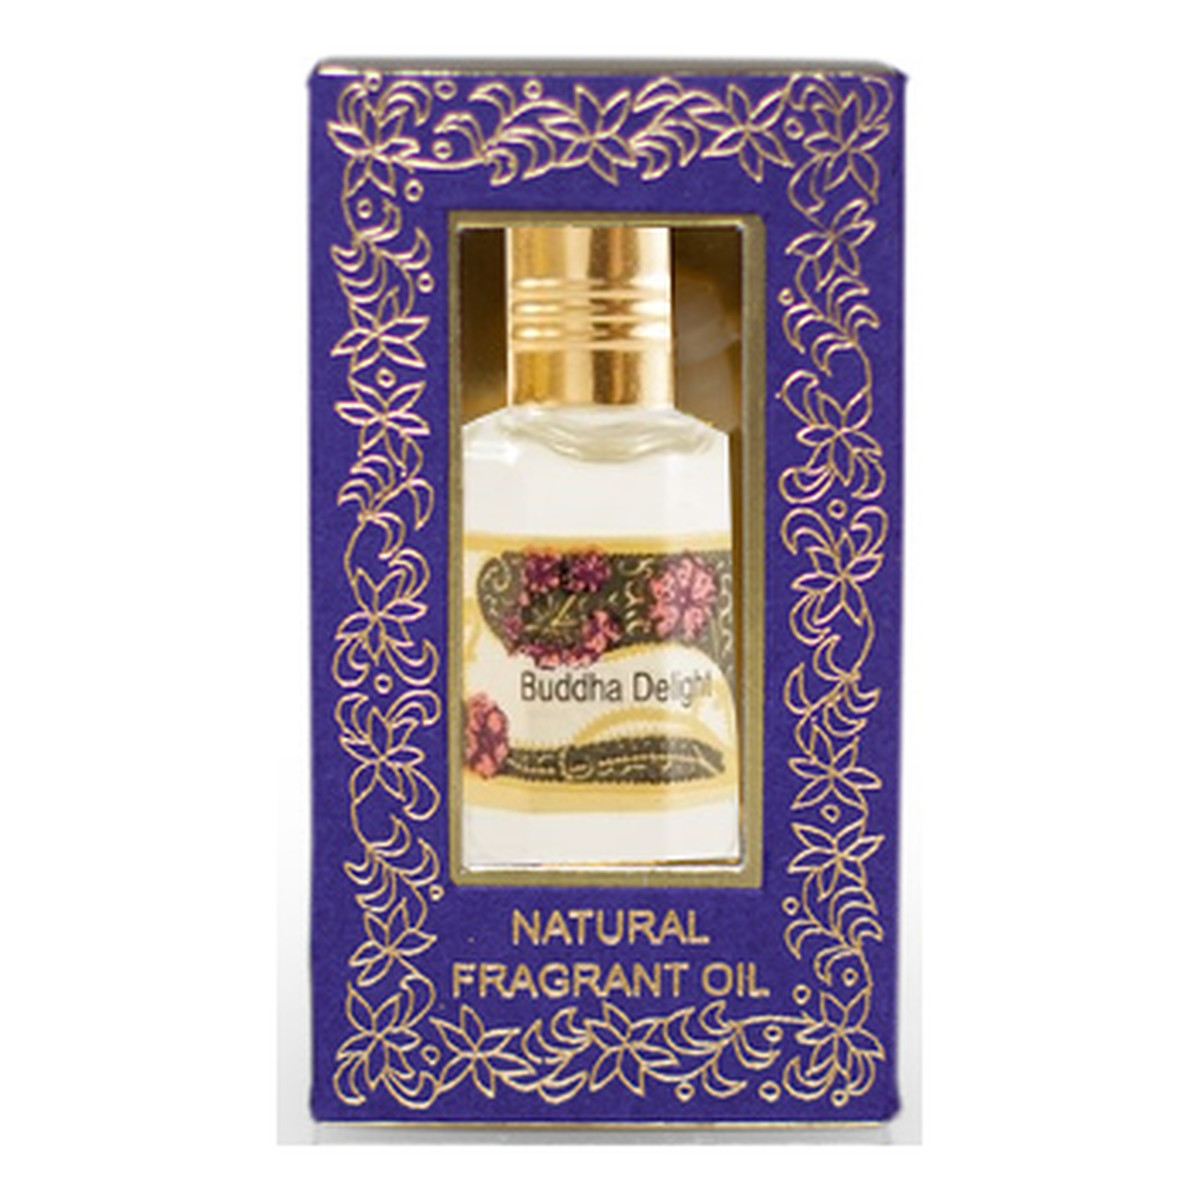 Song of India Indyjskie perfumy w olejku Buddha Delight 10ml